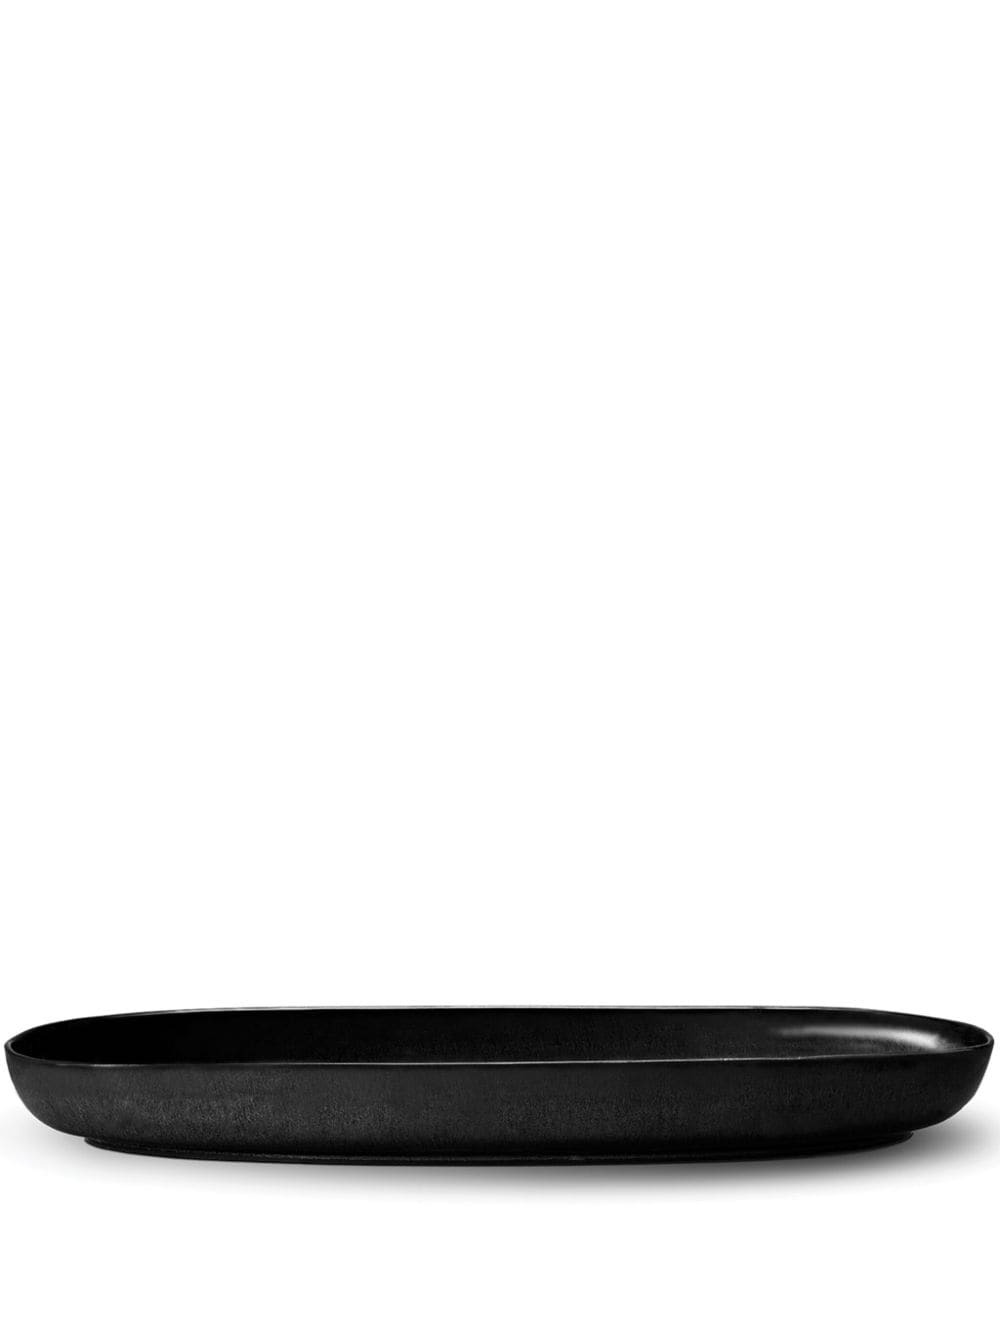 L'Objet medium Terra porcelain platter (5cm x 41cm) - Black von L'Objet